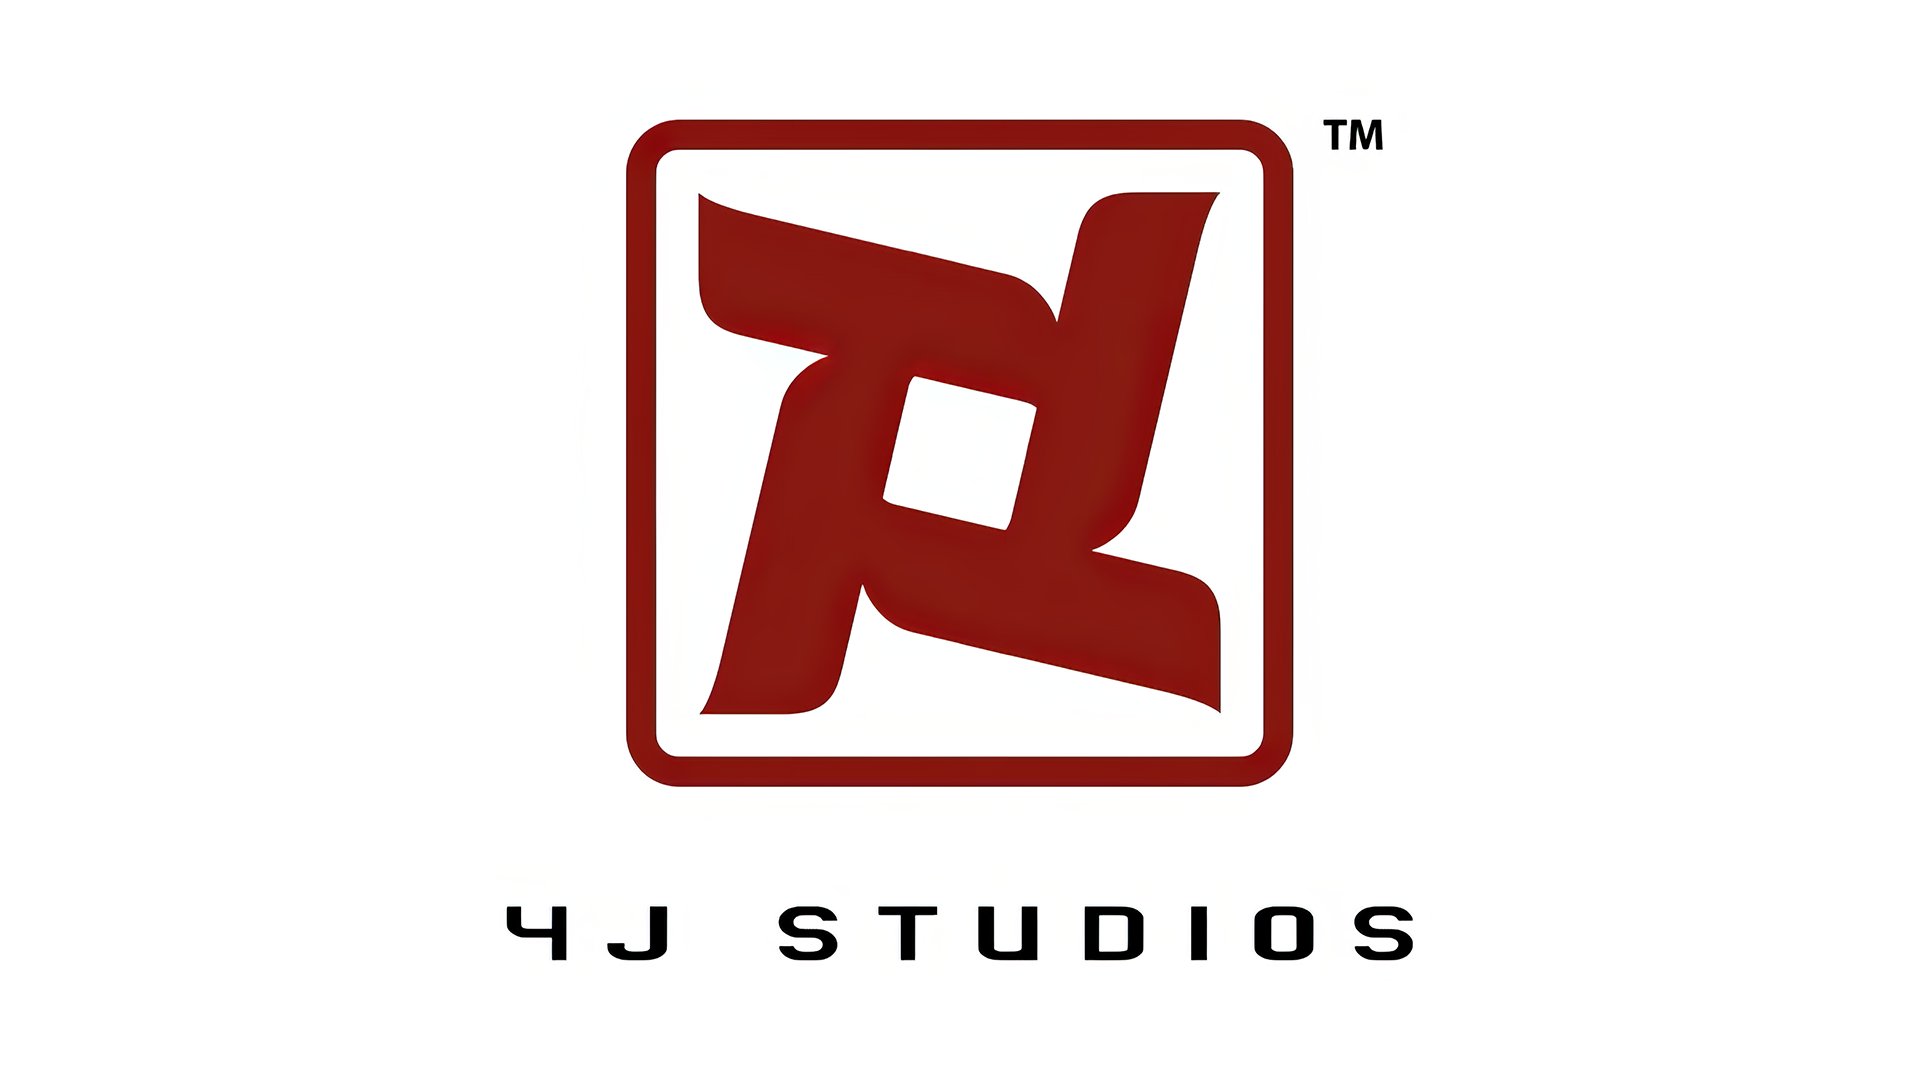 Minecraft console dev 4J Studios announces move into publishing | VGC